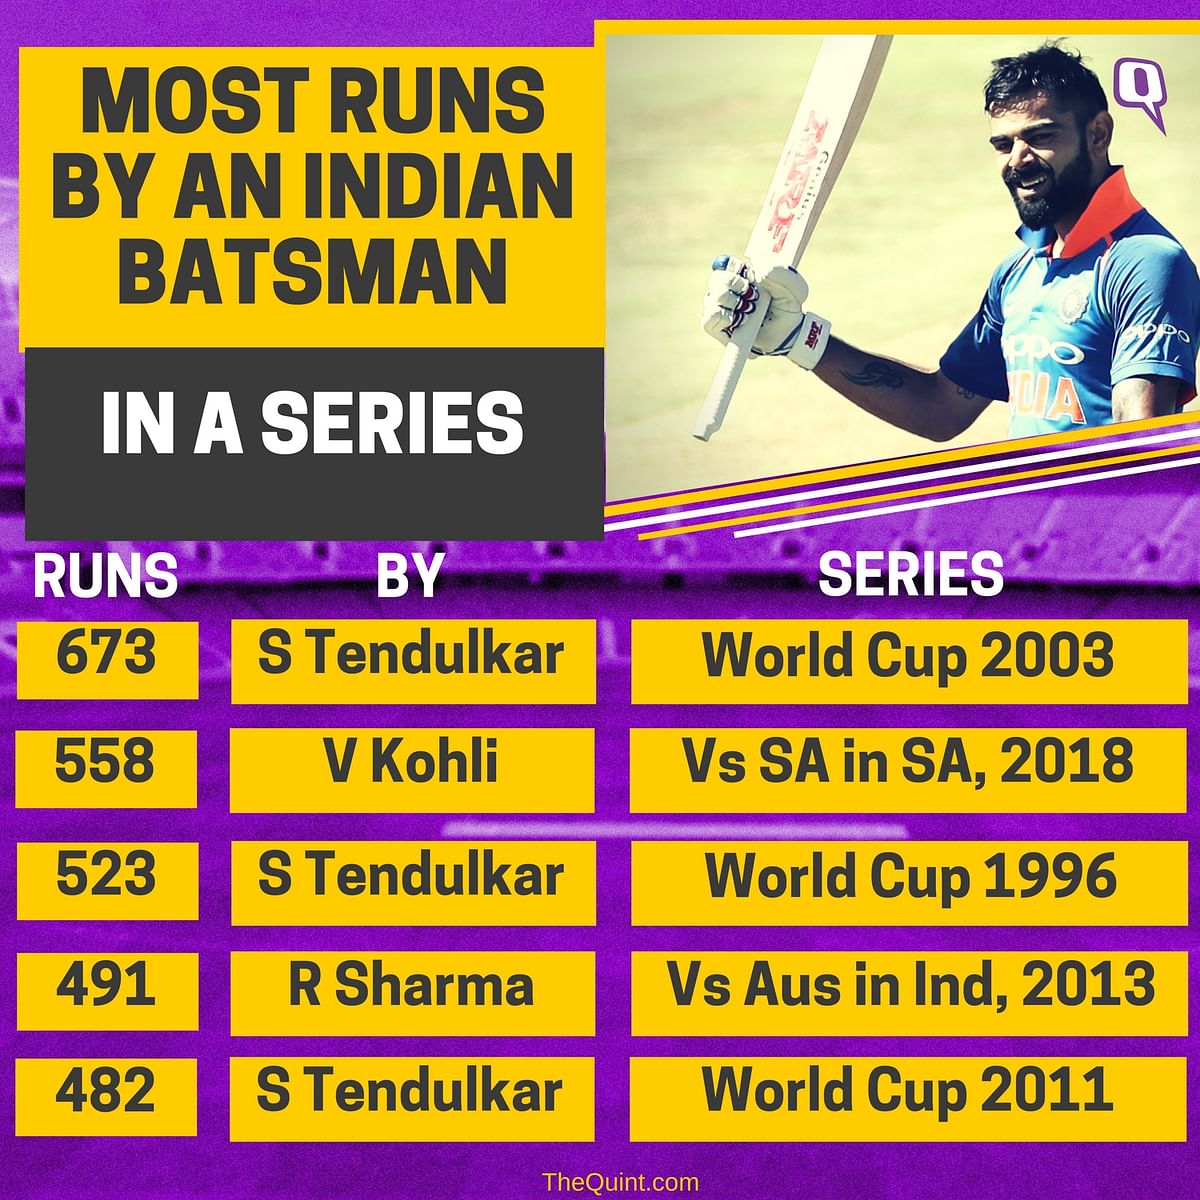 Captain Virat Kohli surpassed Rohit Sharma to become the first batsman to score 500 runs in a bilateral ODI series.